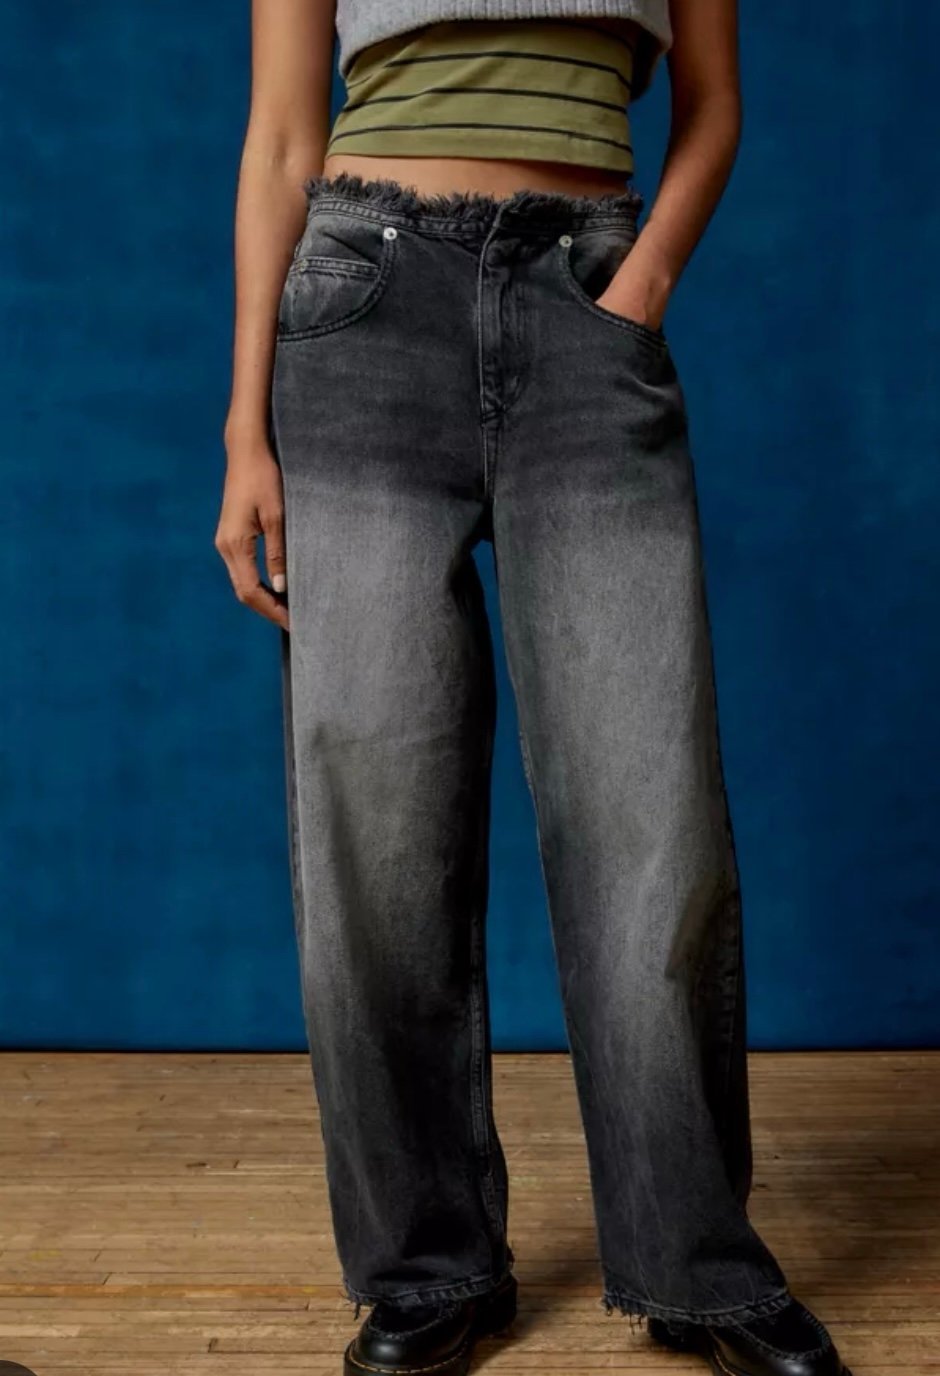 Simple Urban Outfitters BDG Jaya Boyfriend Baggy Jeans Jyjt5Si2R Factory Price